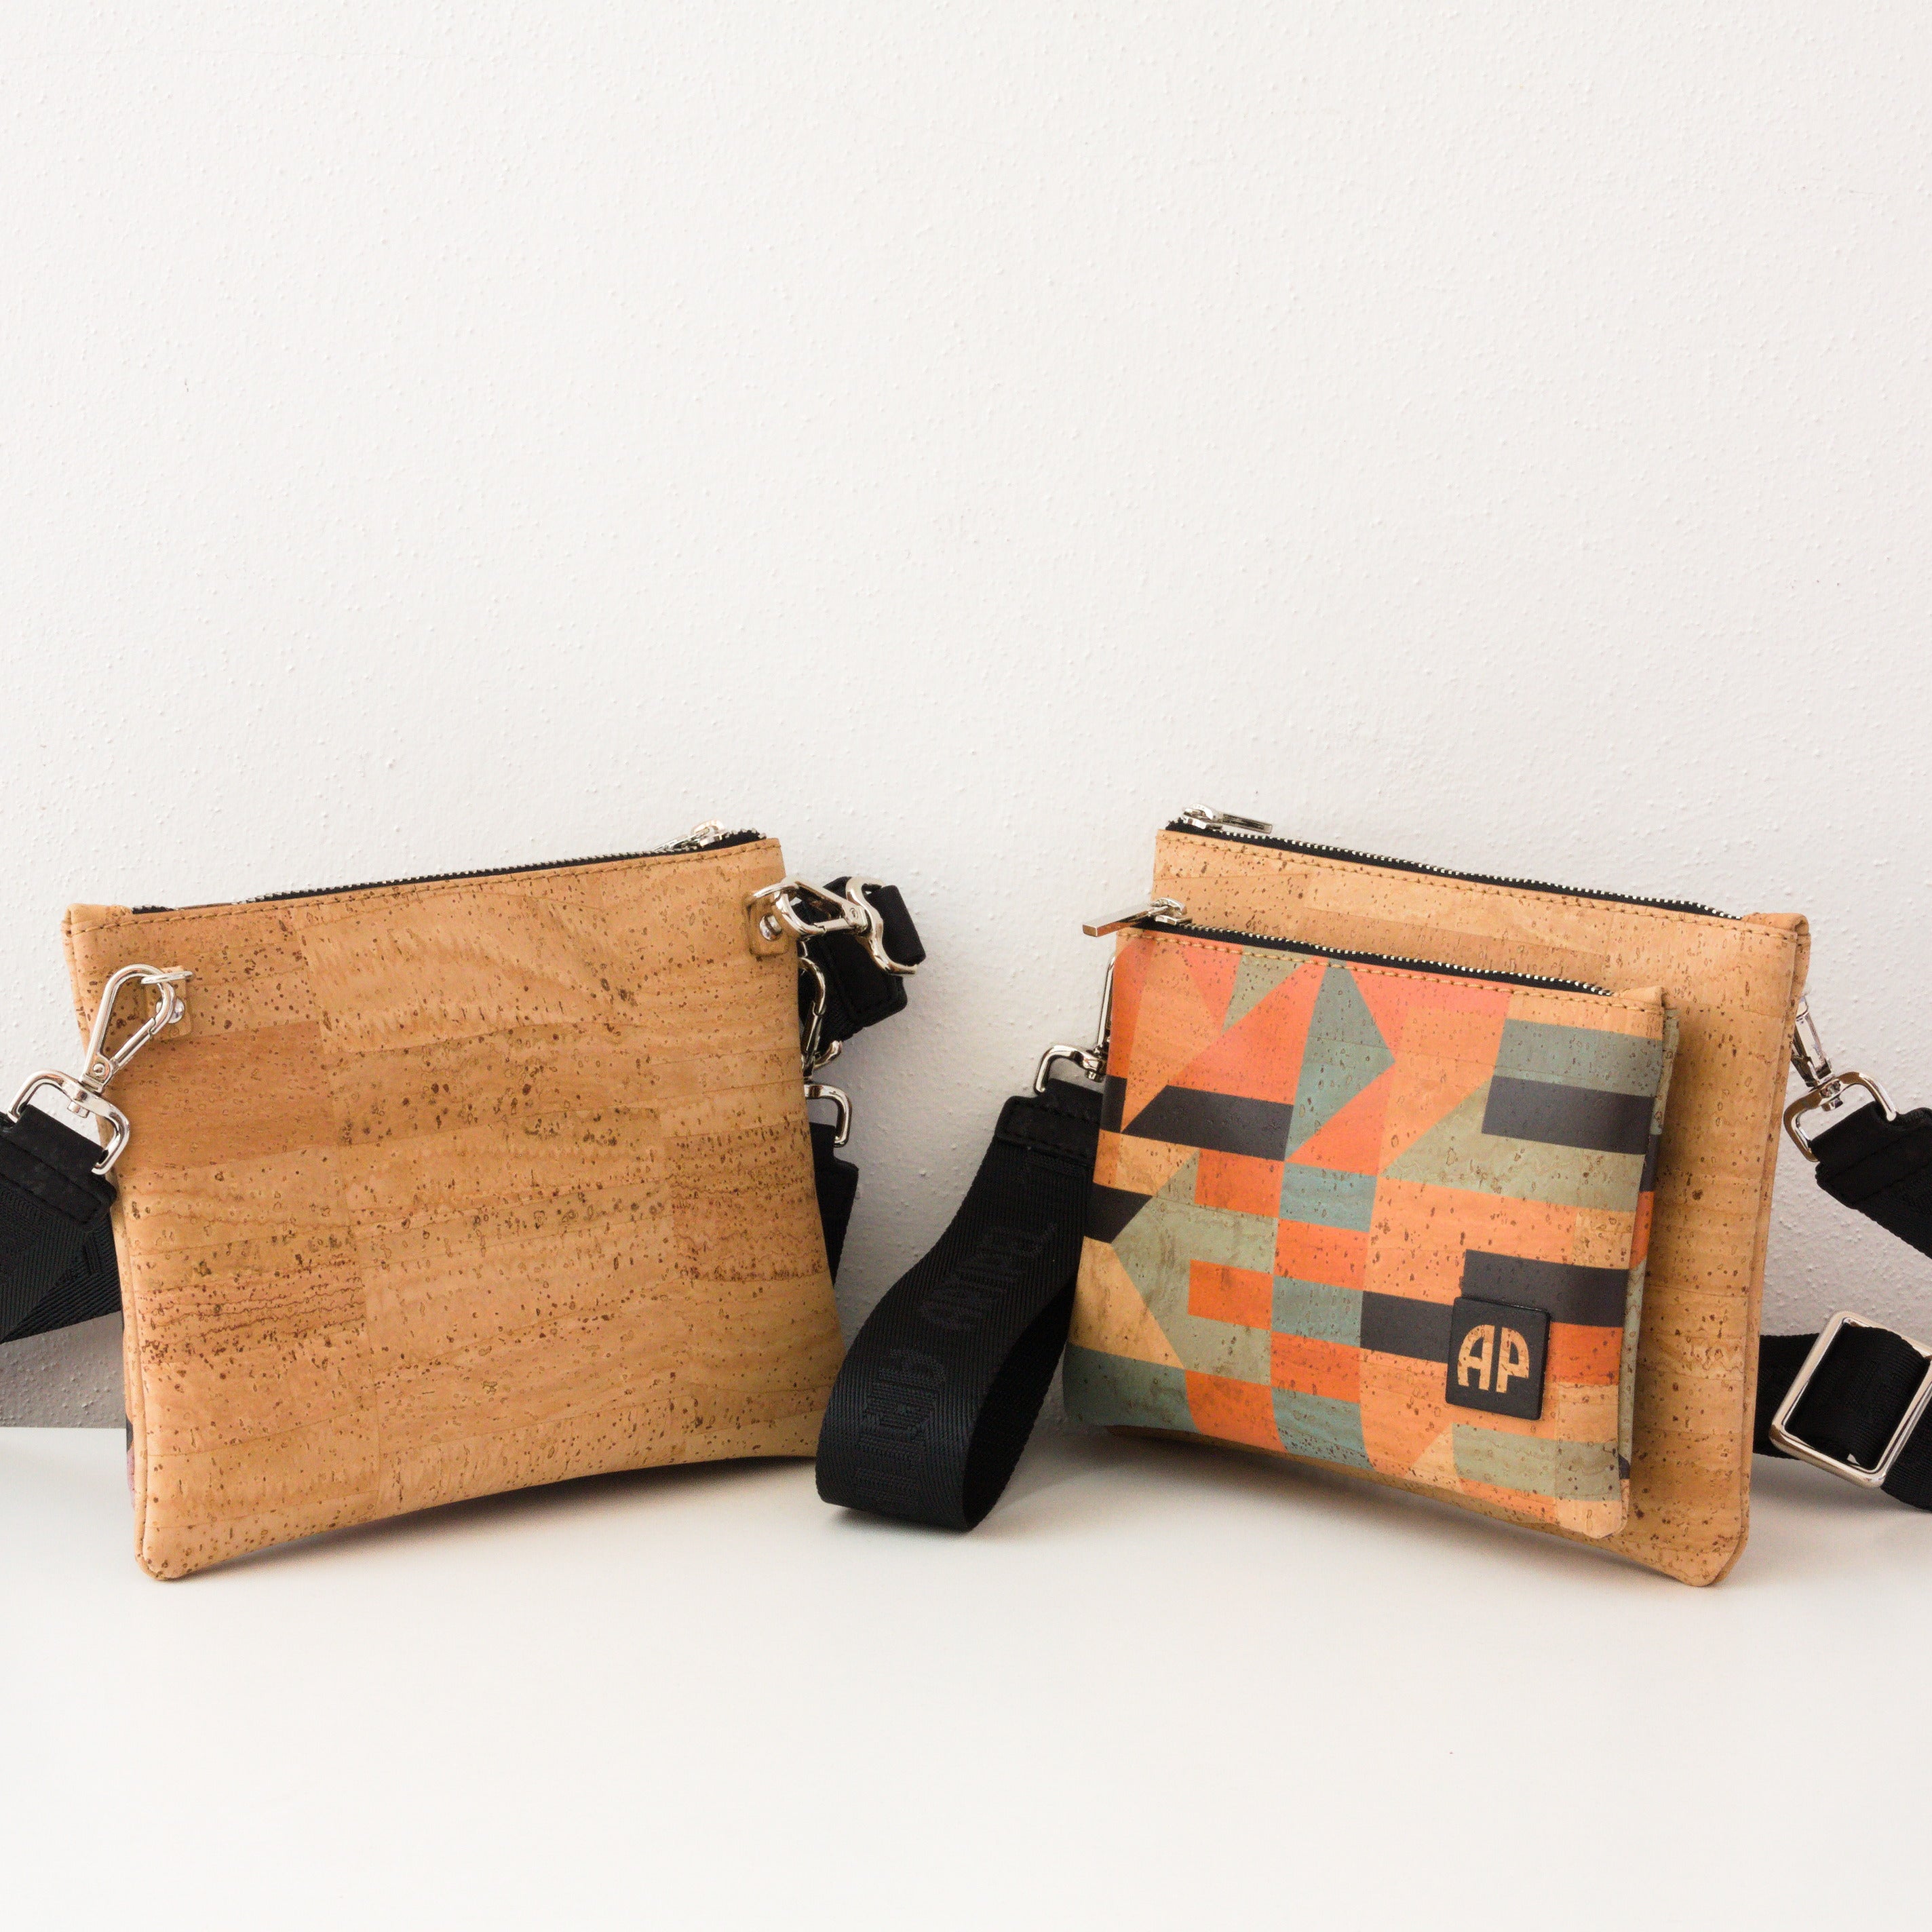 Cork handbag * front pocket detachable * 2 different designs * vegan * shoulder bag for women * crossbody * handmade in Portugal